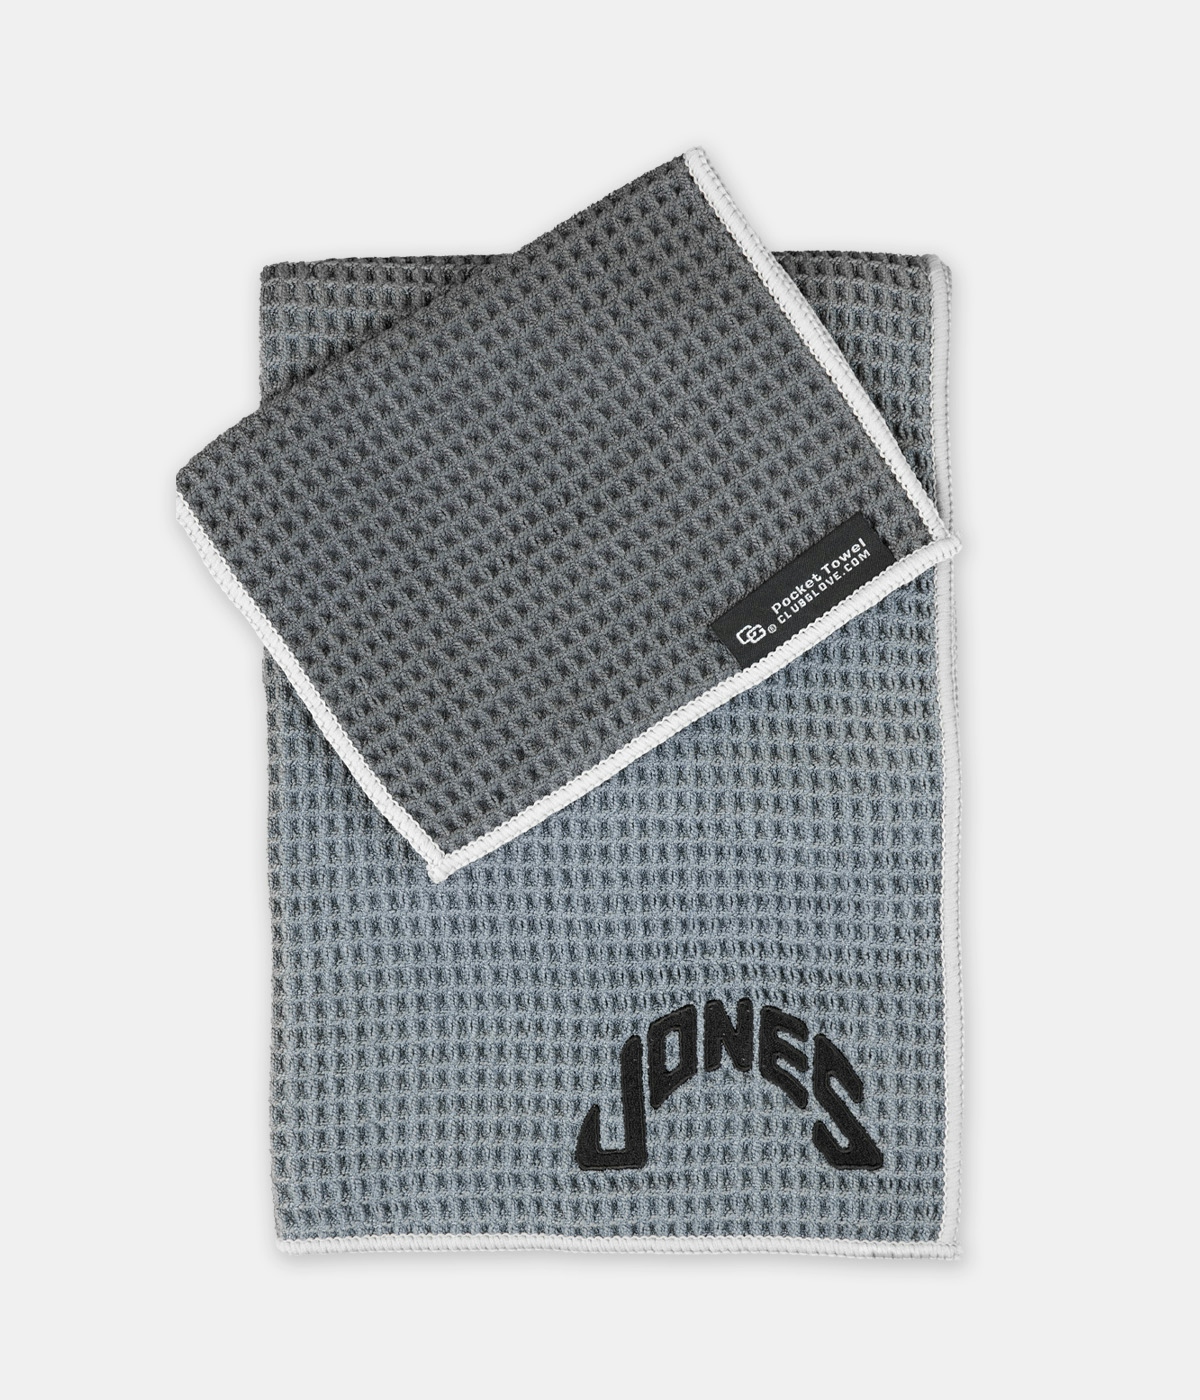 Jones Sports Co. Tour Towel Grey/Black.